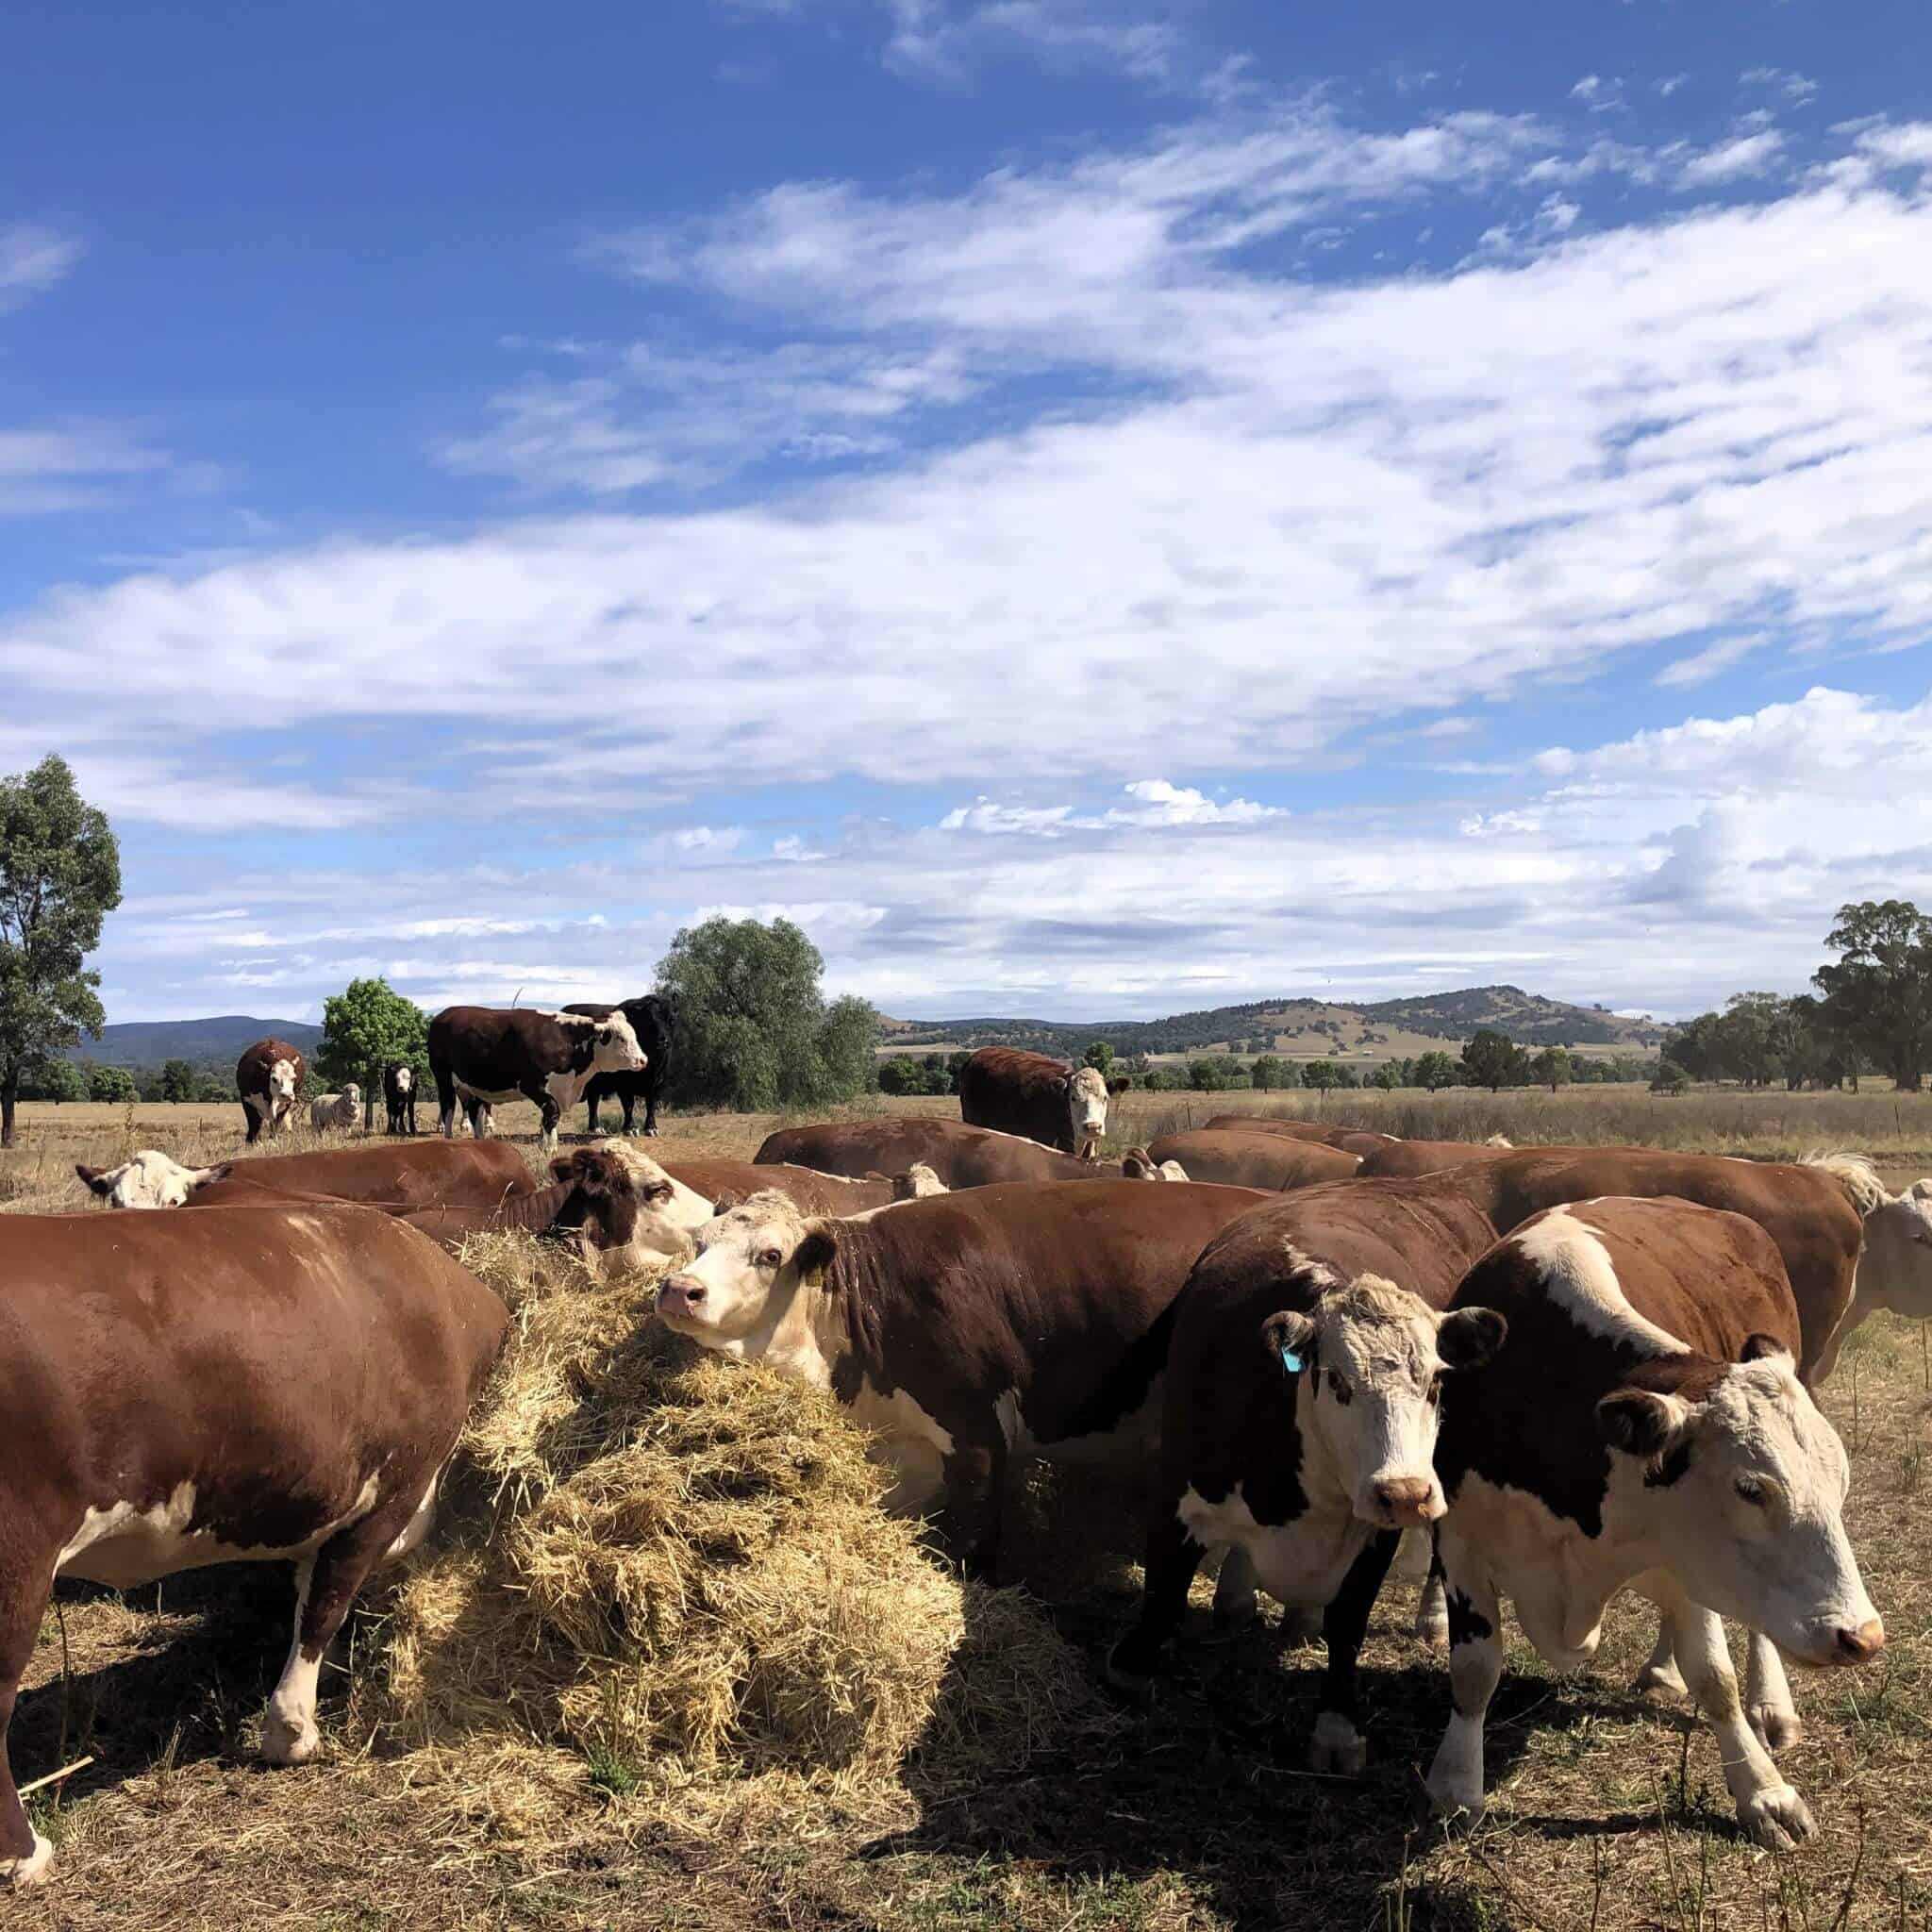 Several cows feed on fresh hay deposited in their paddock